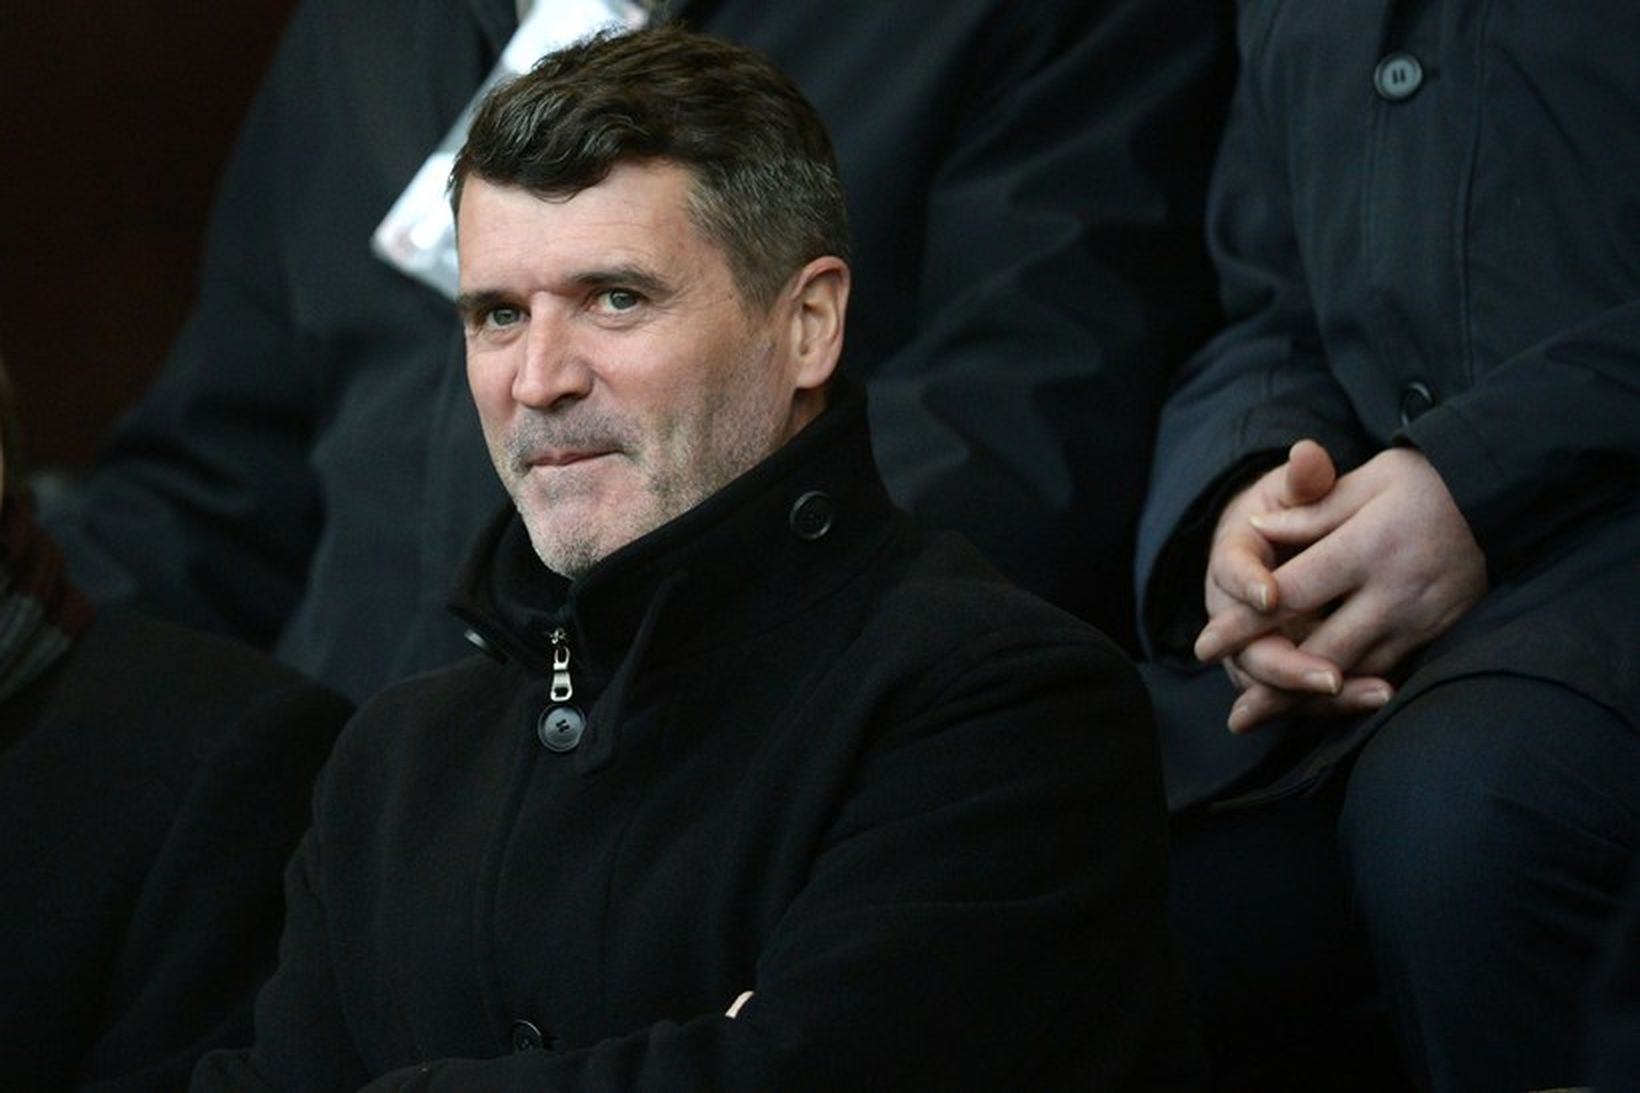 Roy Keane starfar í dag hjá Sky Sports.